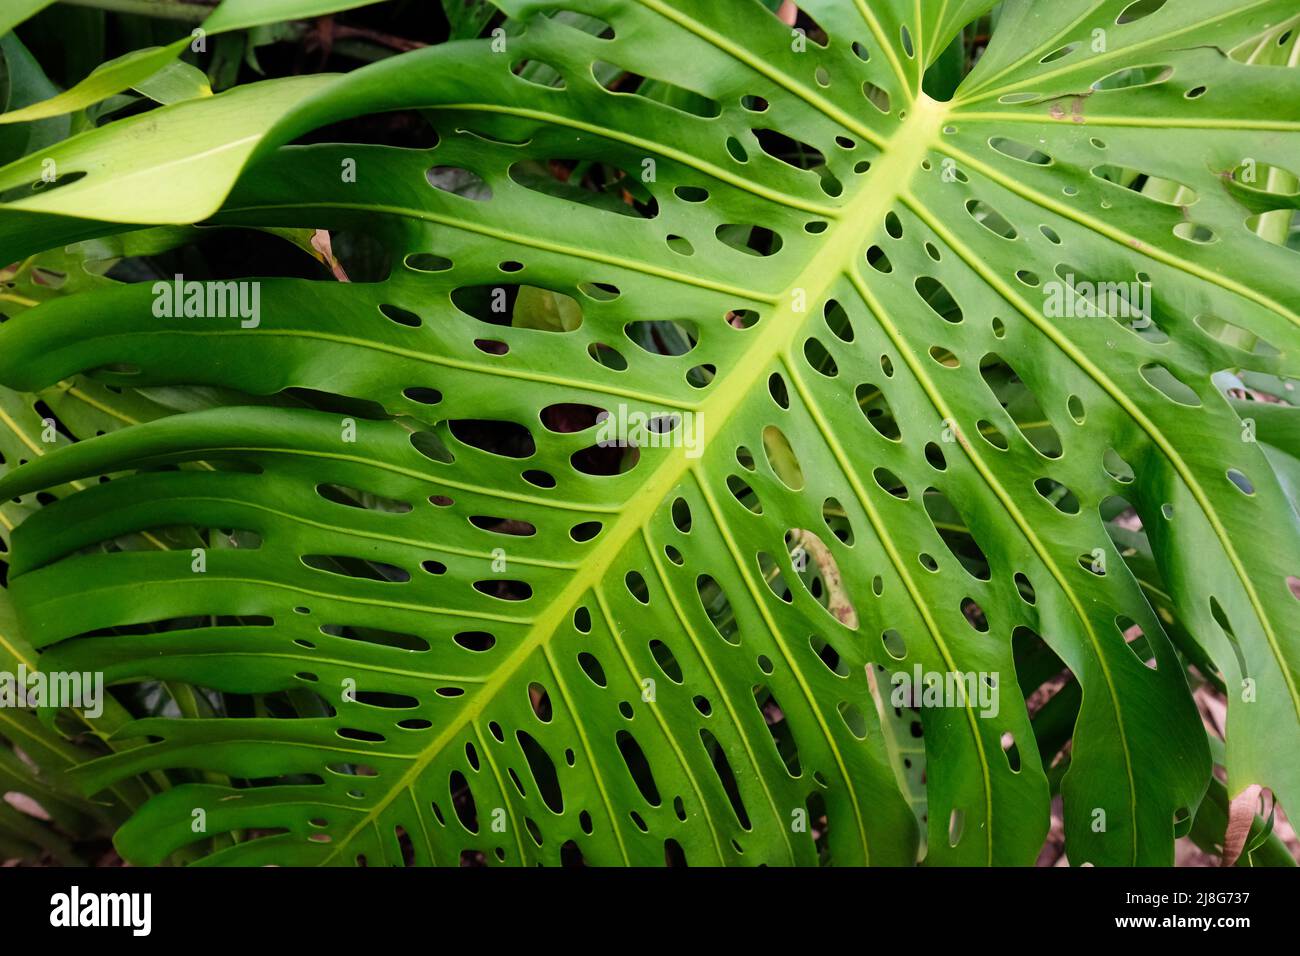 Large leaf house plant -Fotos und -Bildmaterial in hoher Auflösung – Alamy